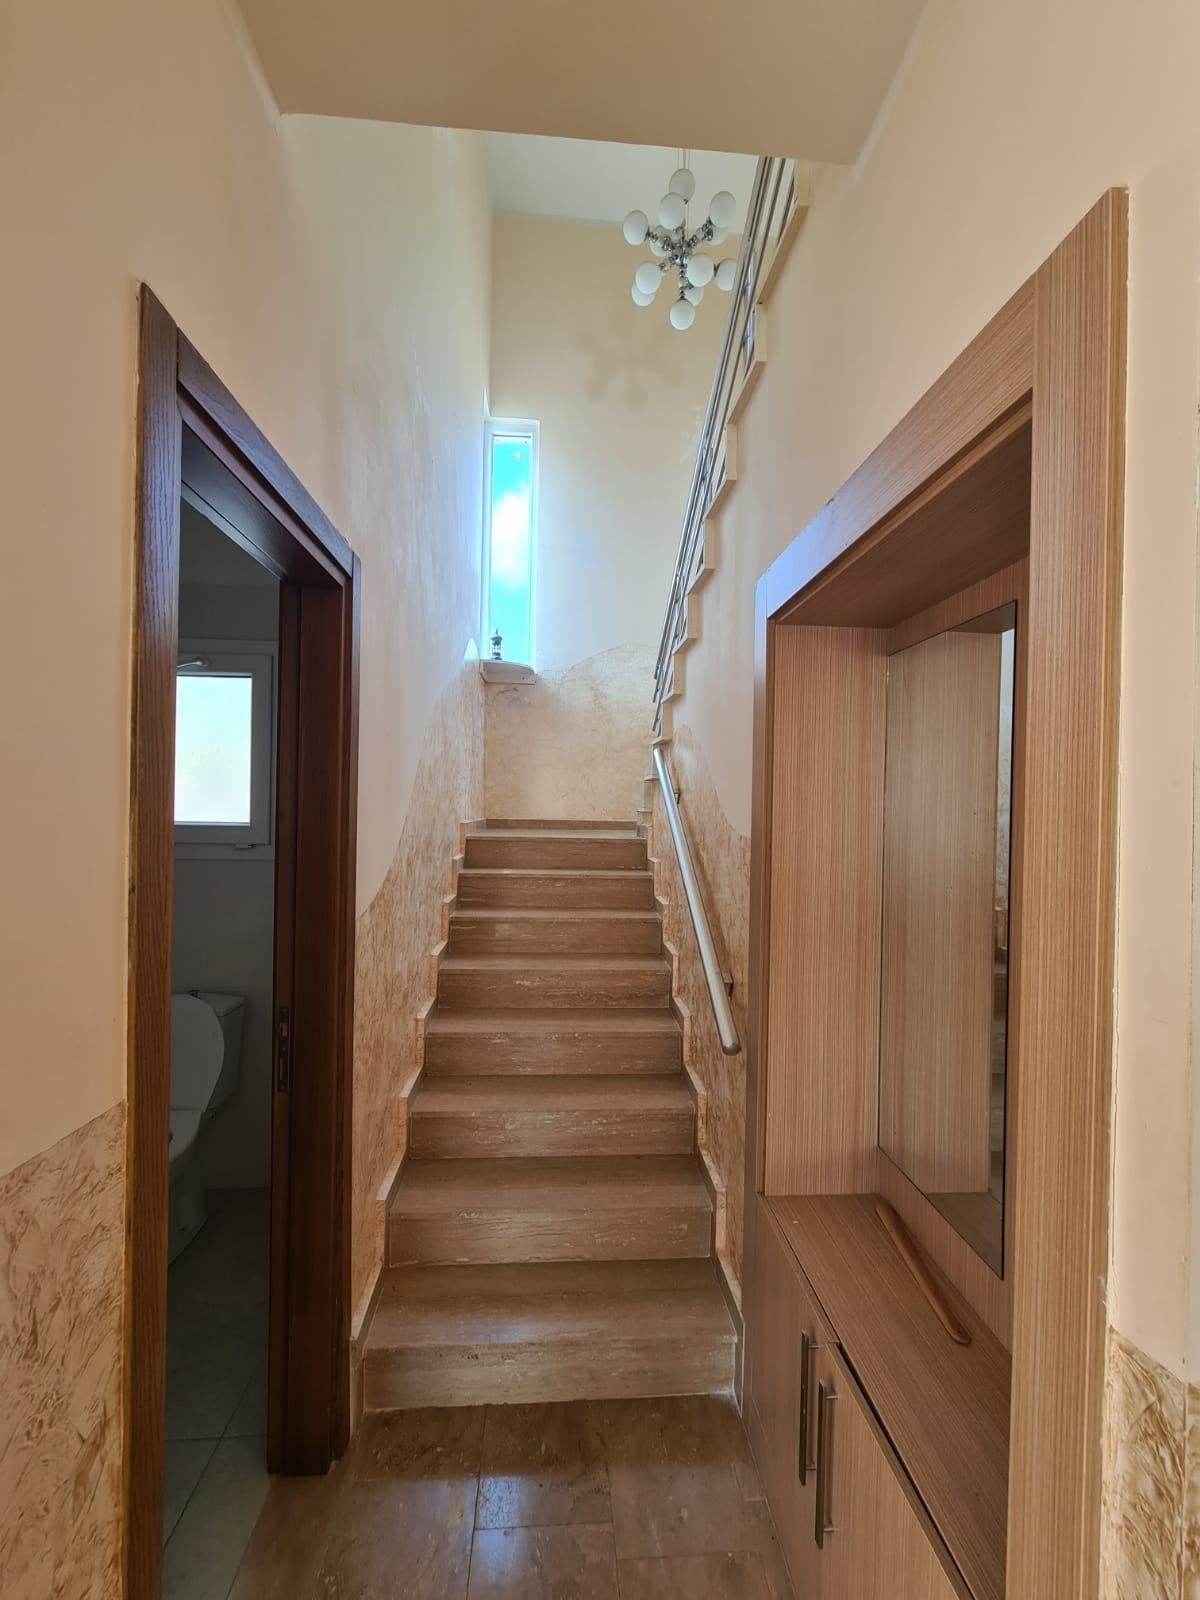 3 bedroom villa for sale in Kyrenia, Karshiyaka-7b9be7c7-5af6-49a2-bba6-401bd0bd3161